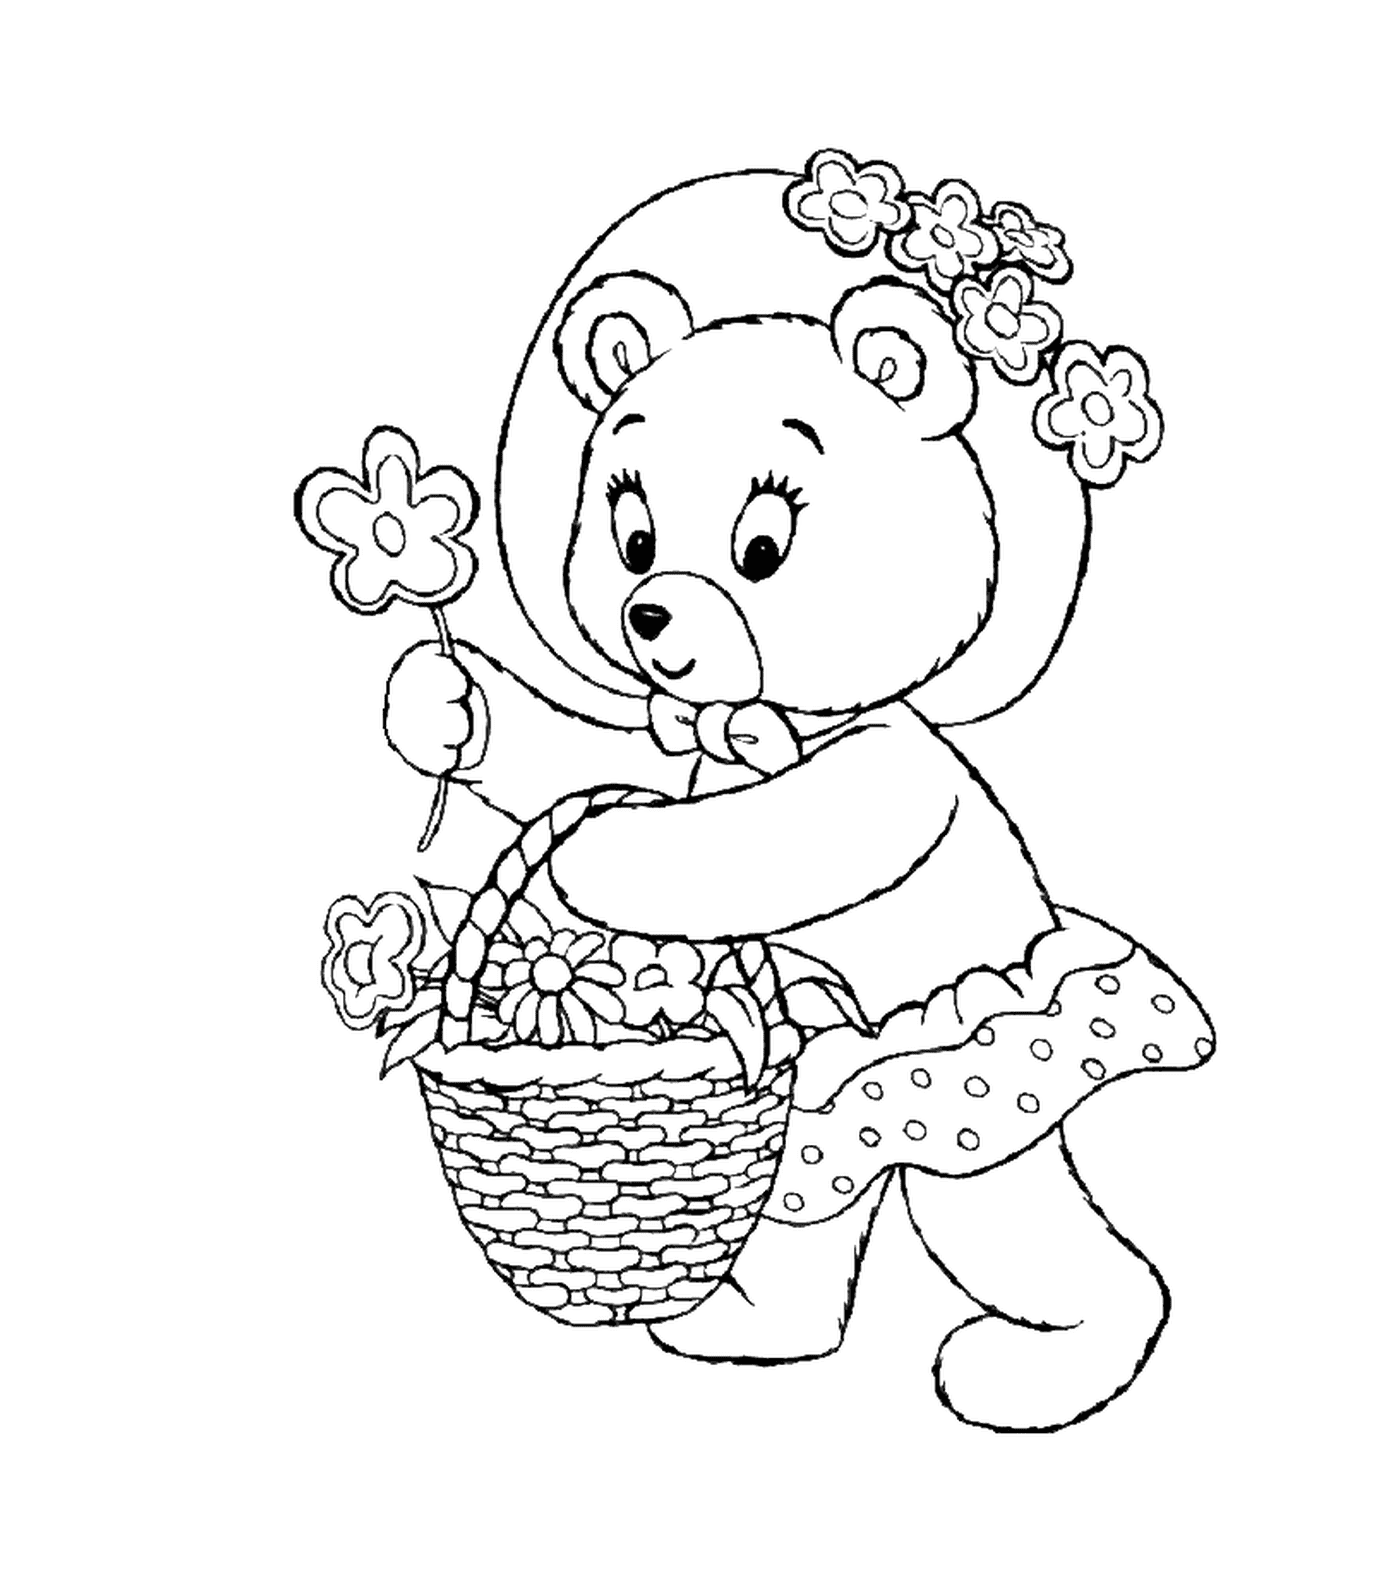  Mirou with a basket 